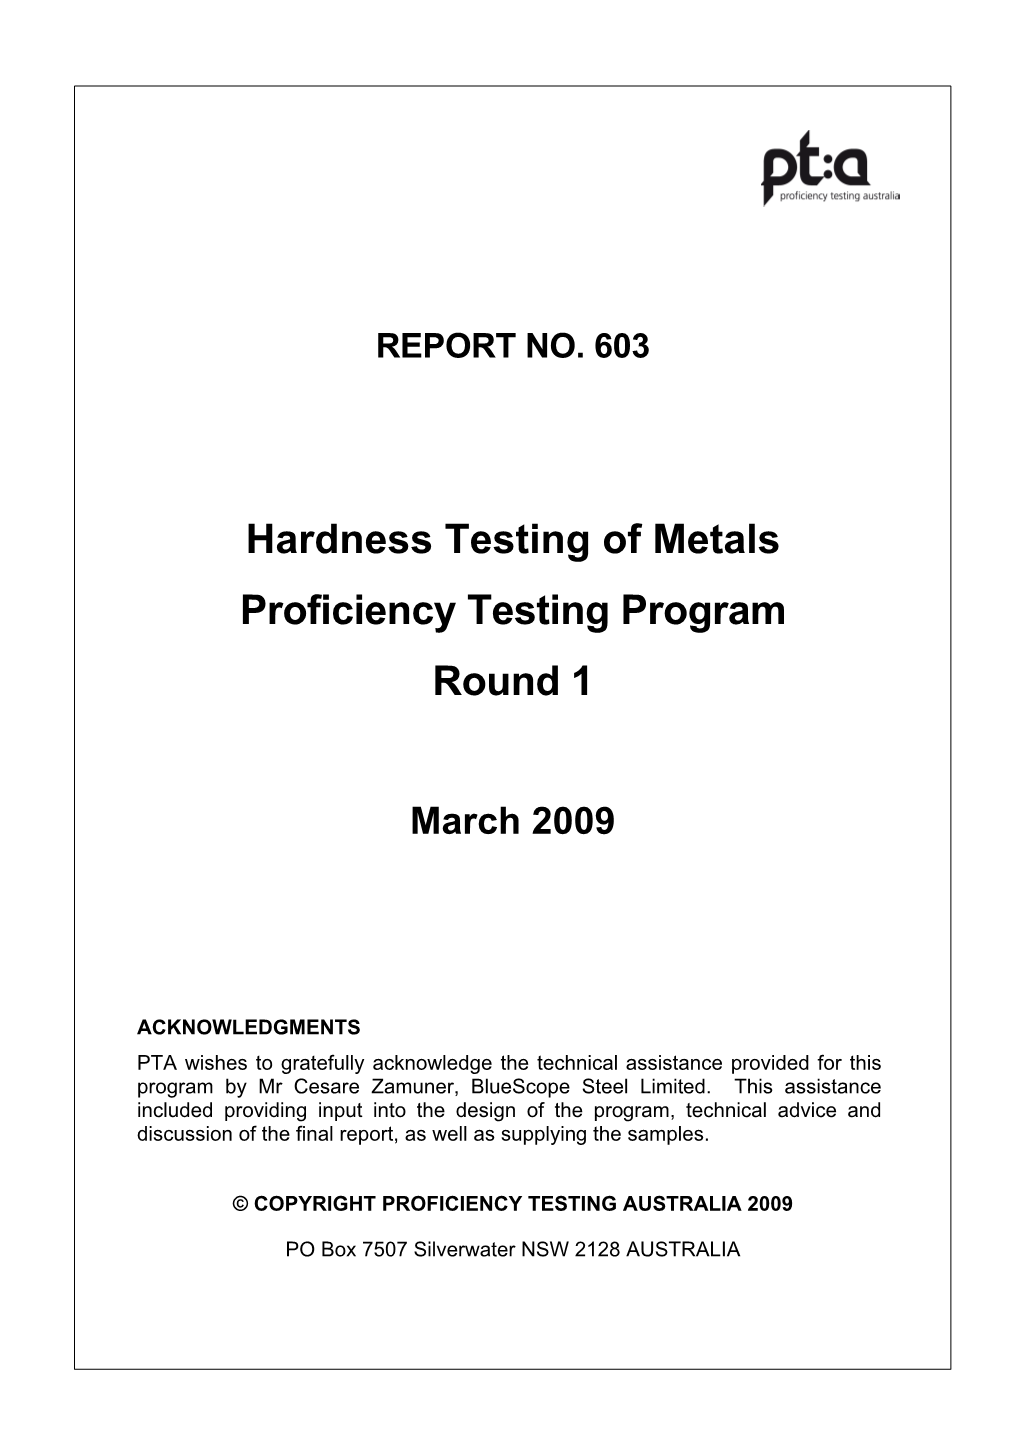 Hardness Testing of Metals Proficiency Testing Program Round 1, December 2008